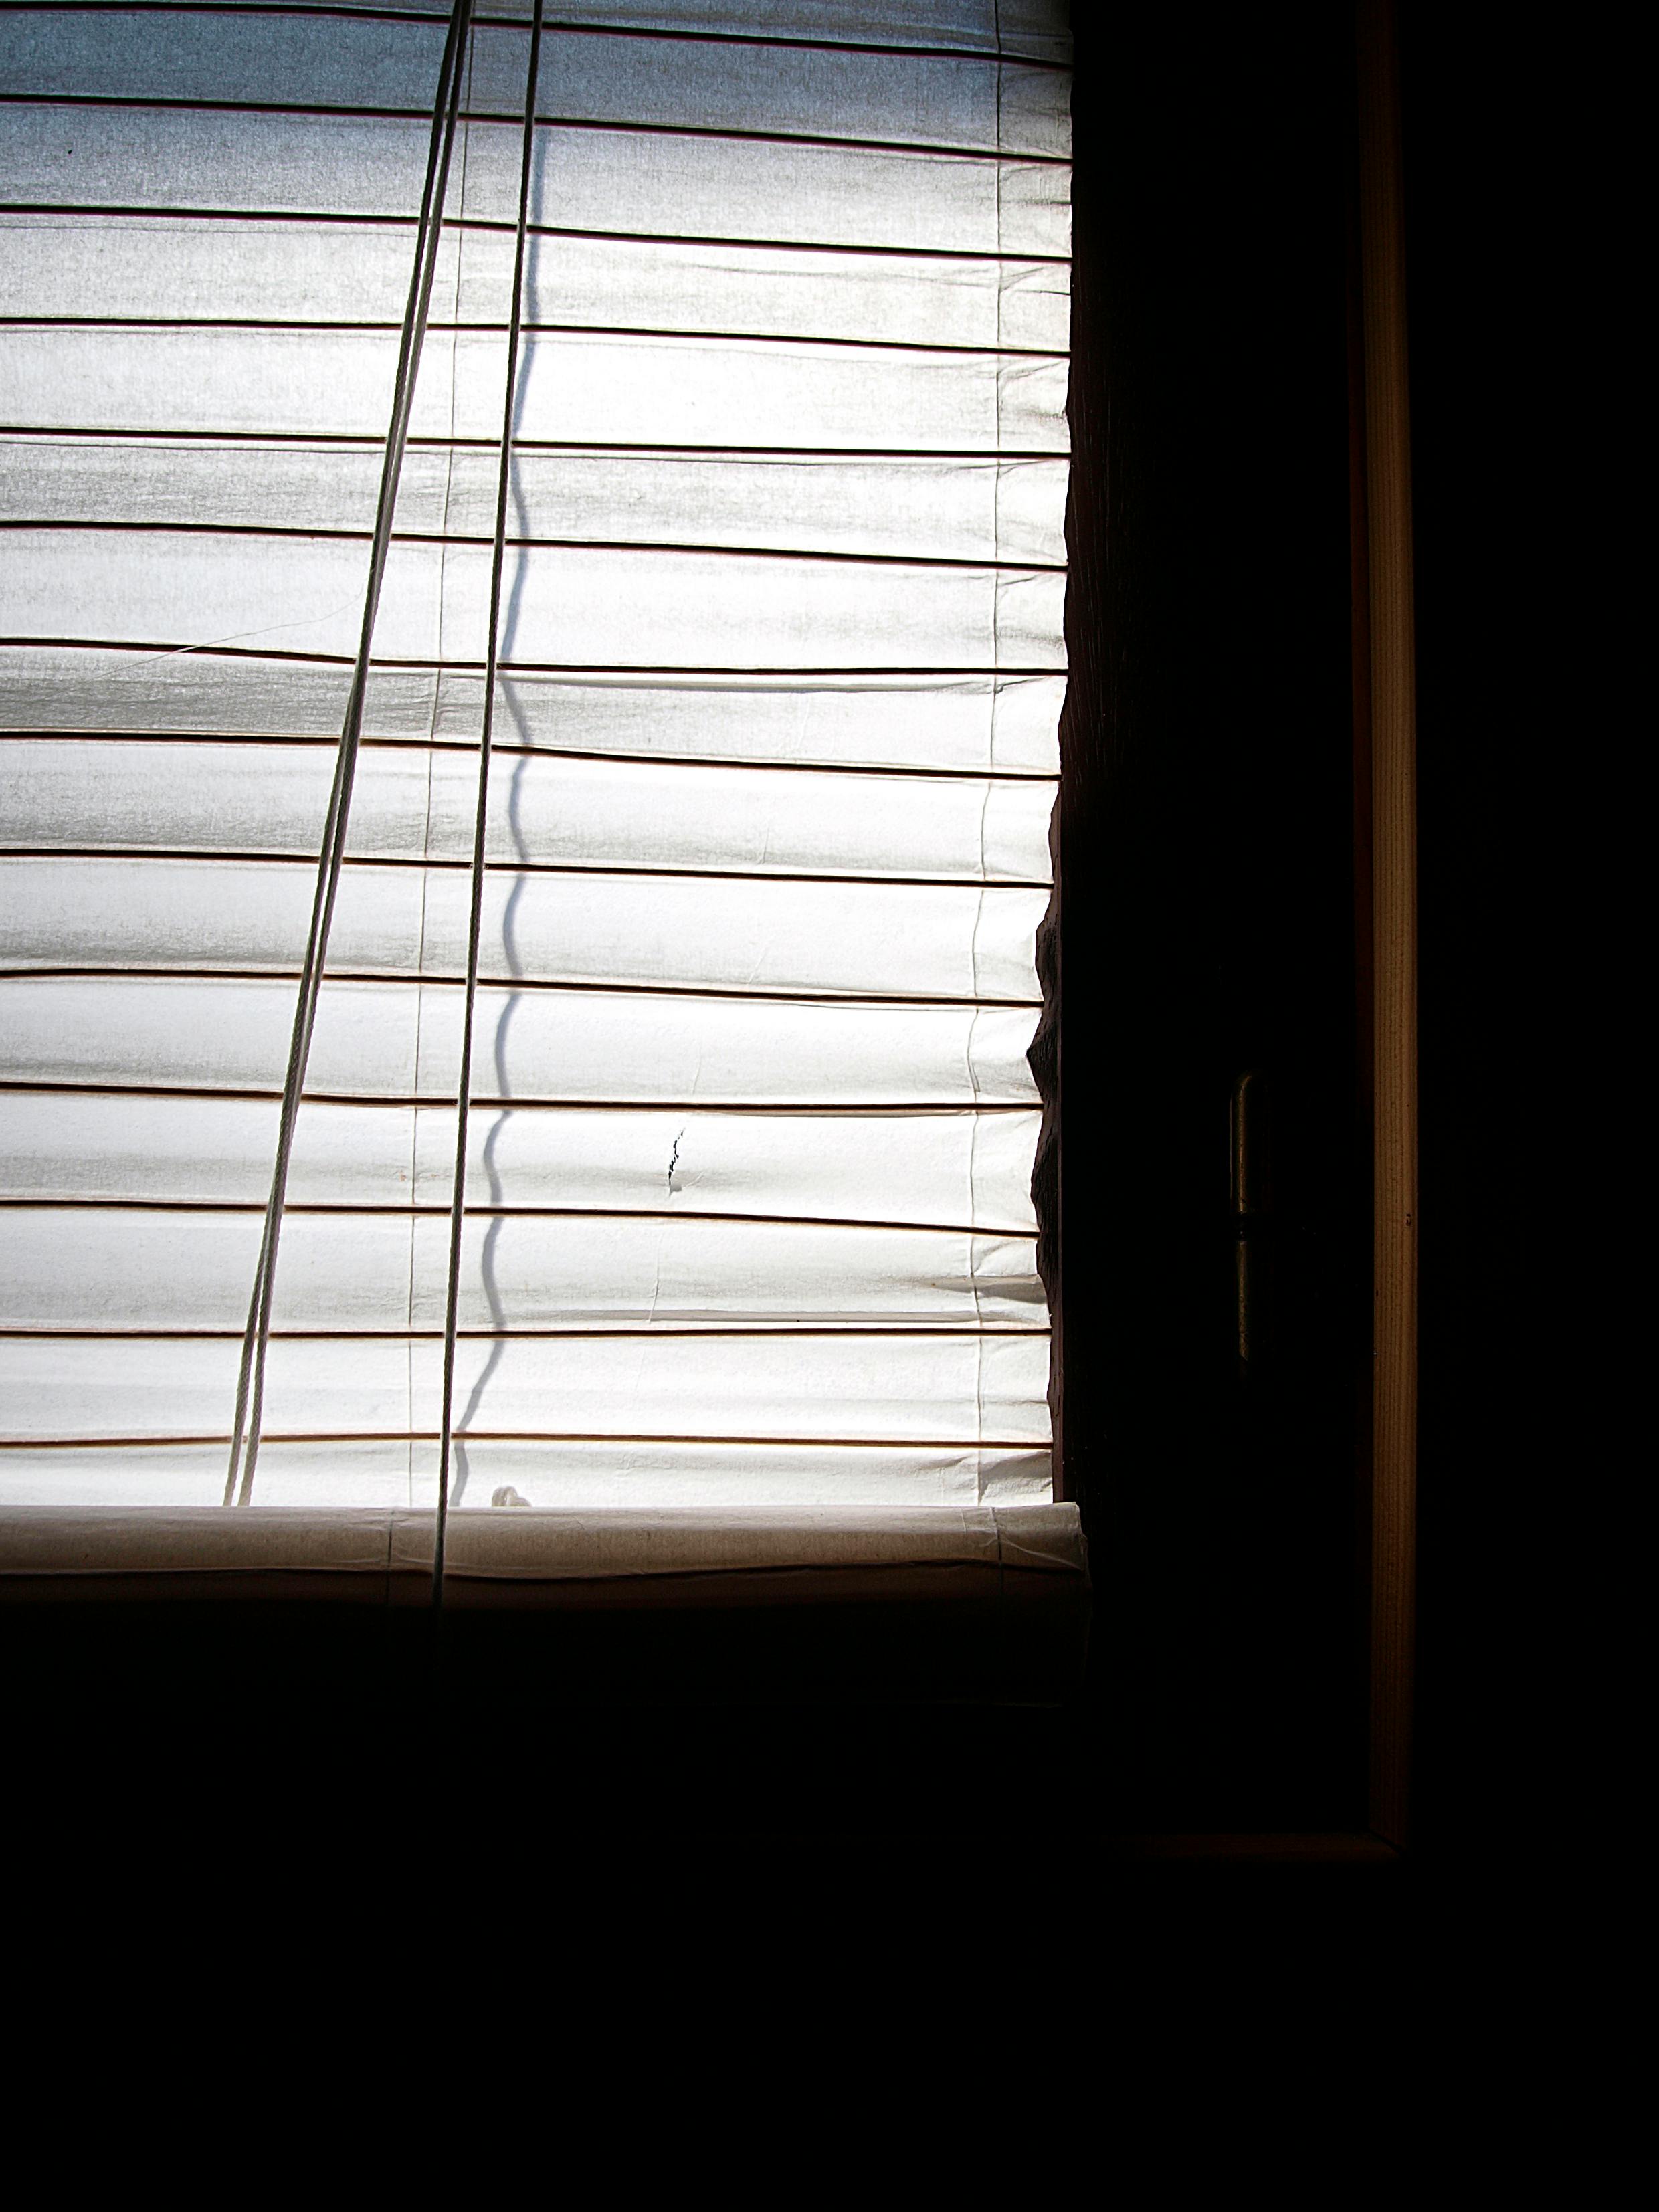 Free stock photo of curtain, window